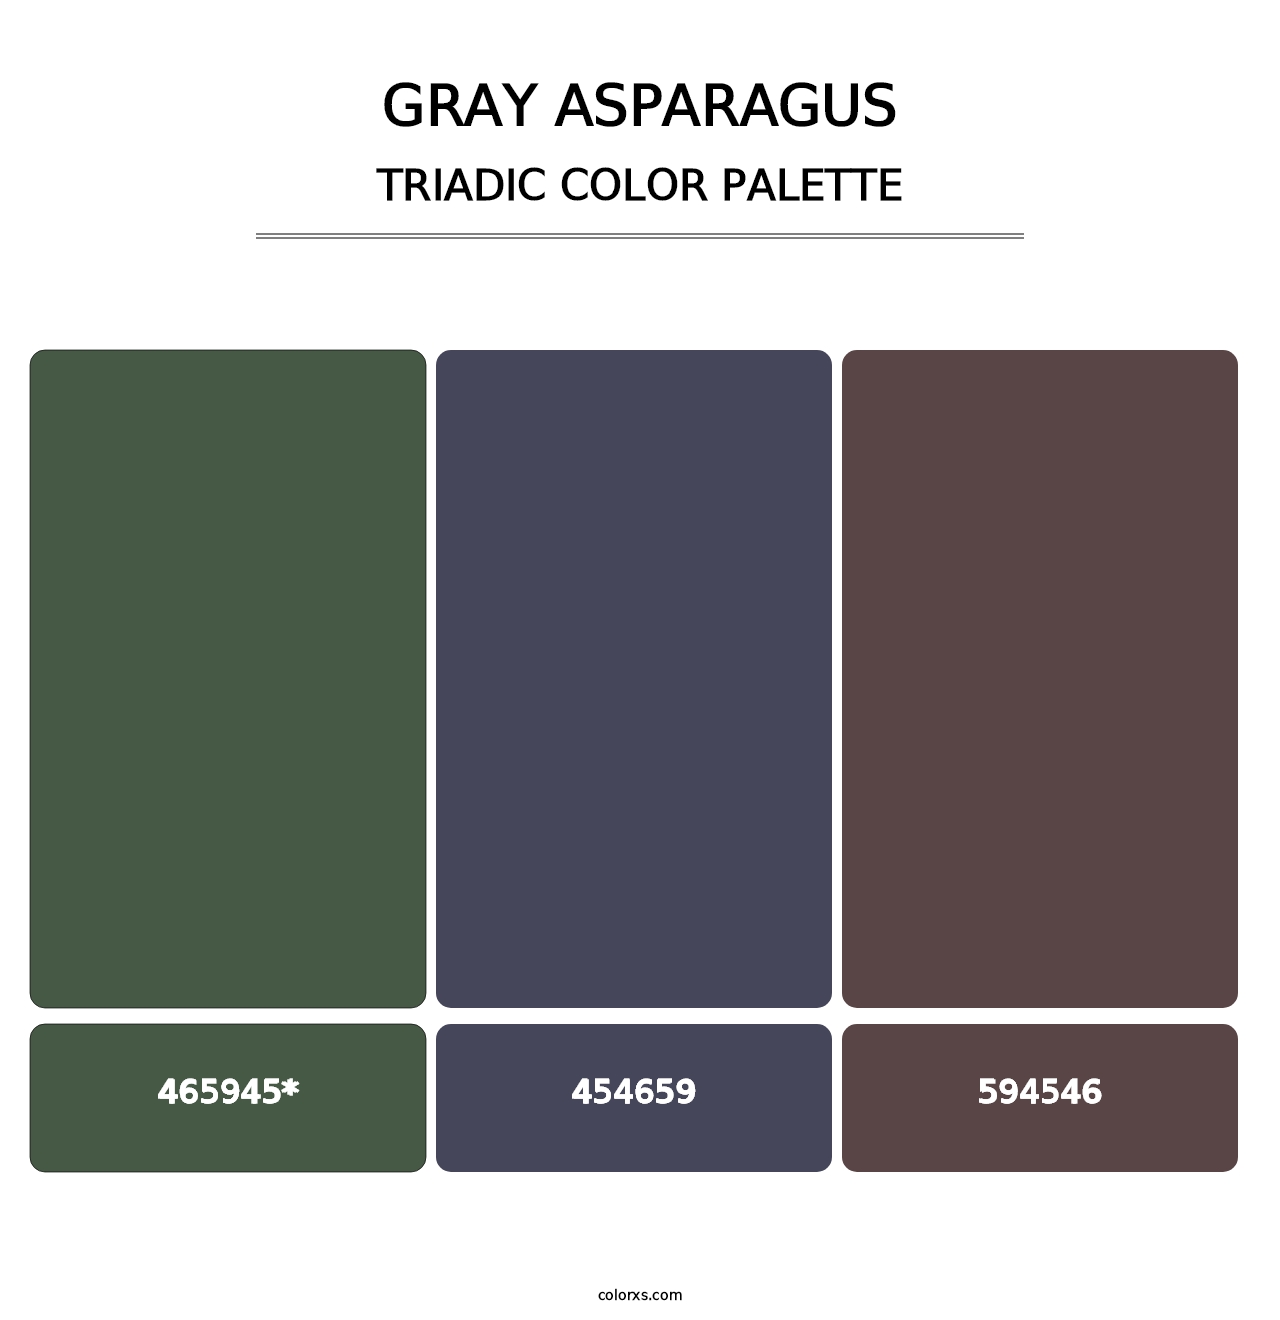 Gray Asparagus - Triadic Color Palette